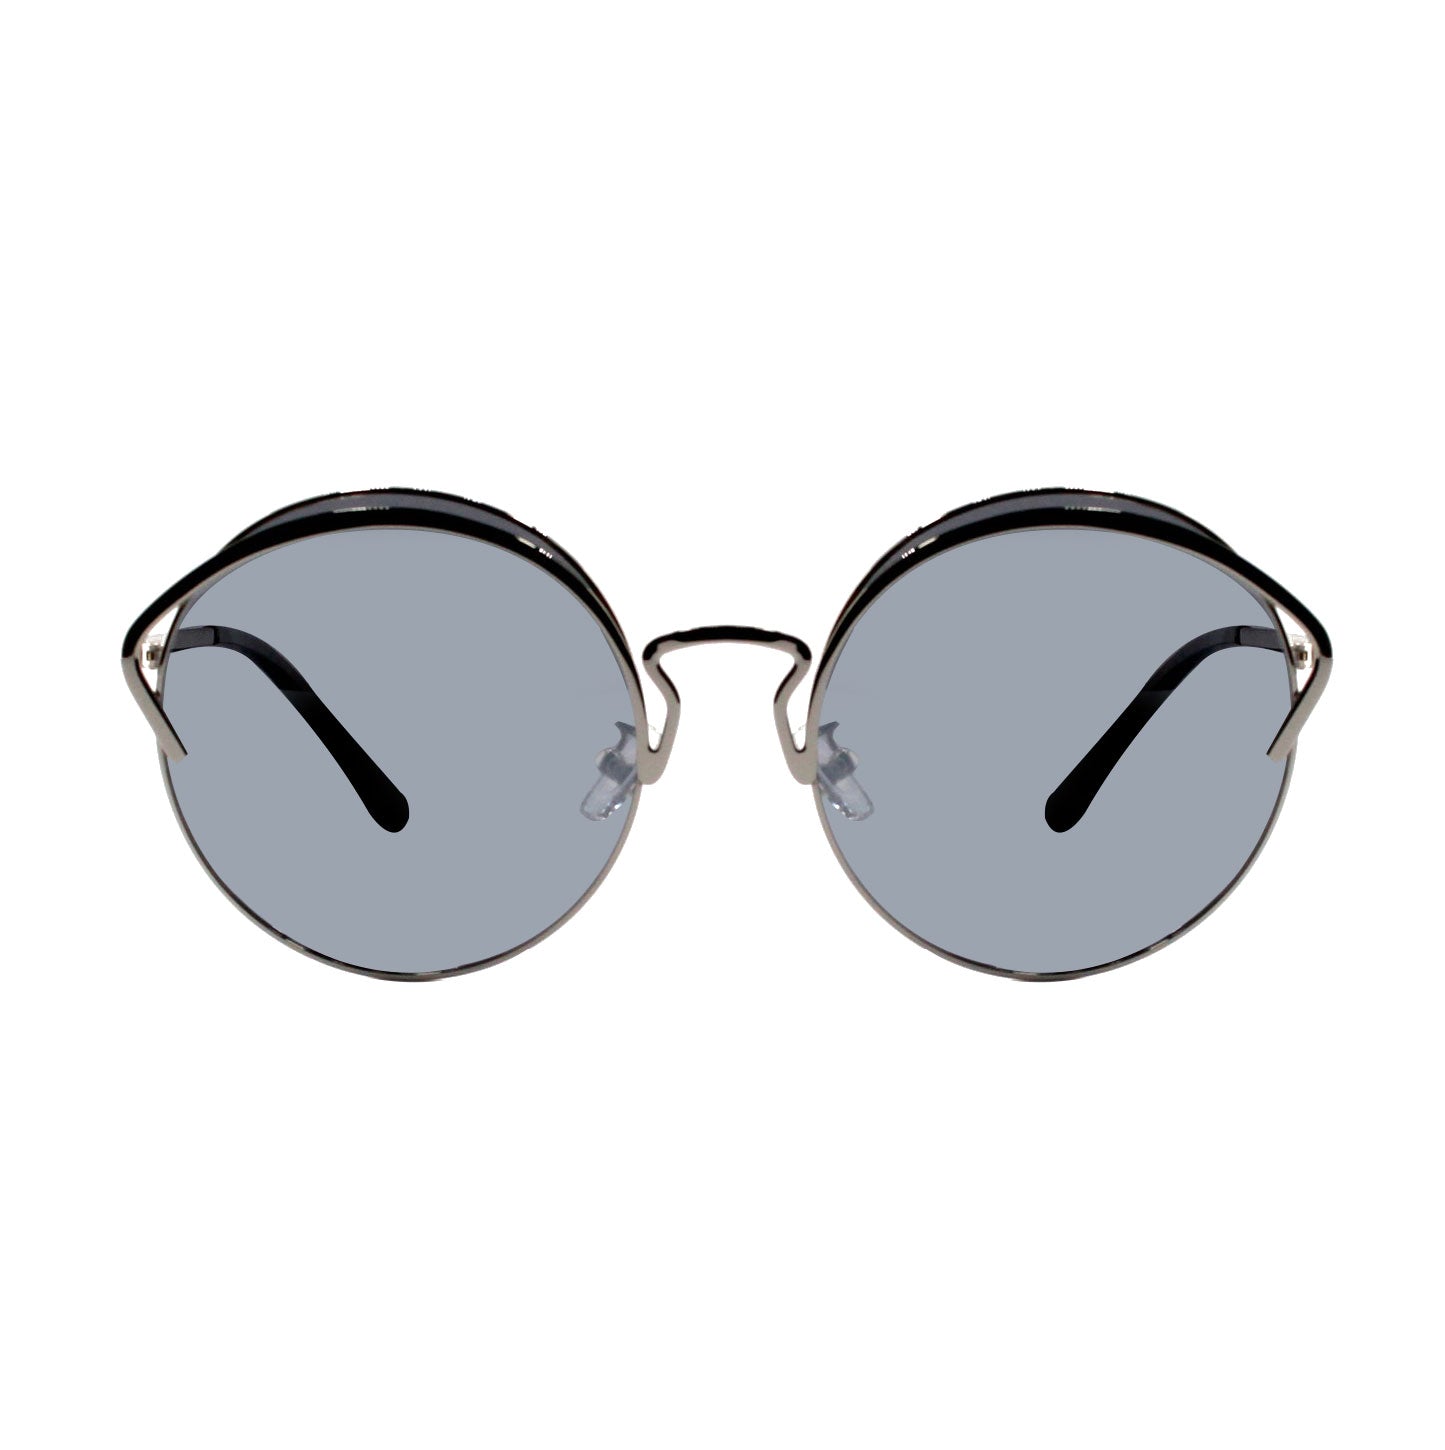 Shades X - Polarized Sunglasses | Model 7056